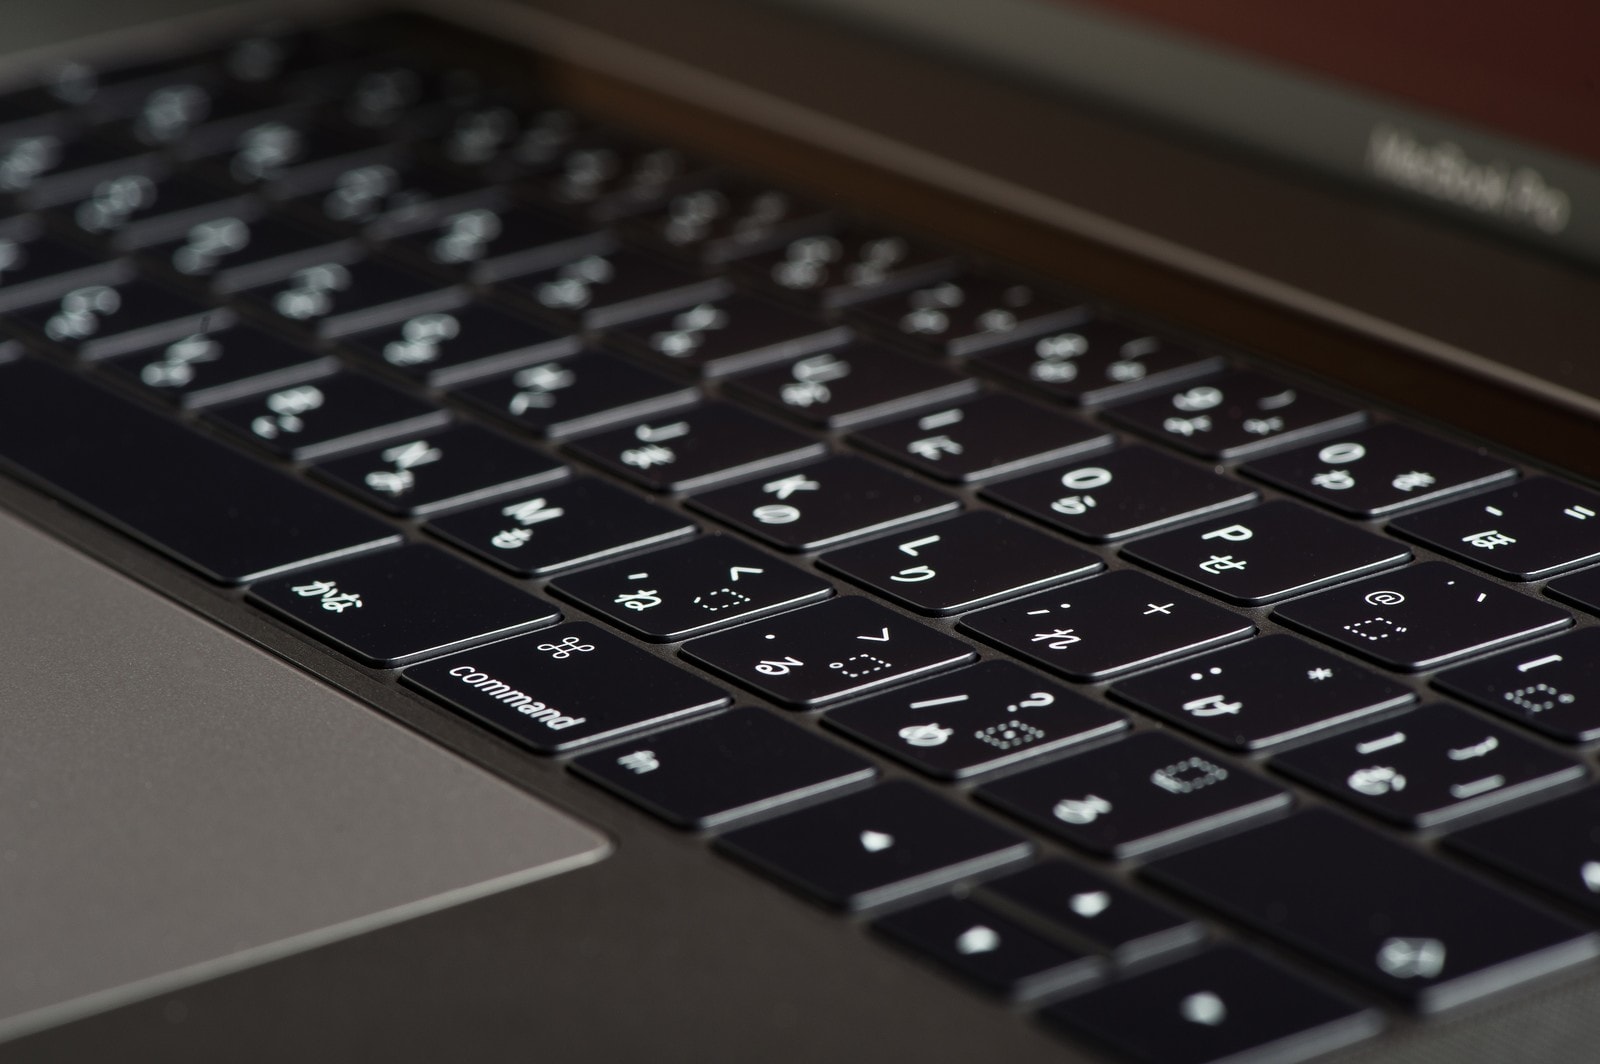 MacBook Proのバタフライキーボードは不具合が多発しているという噂